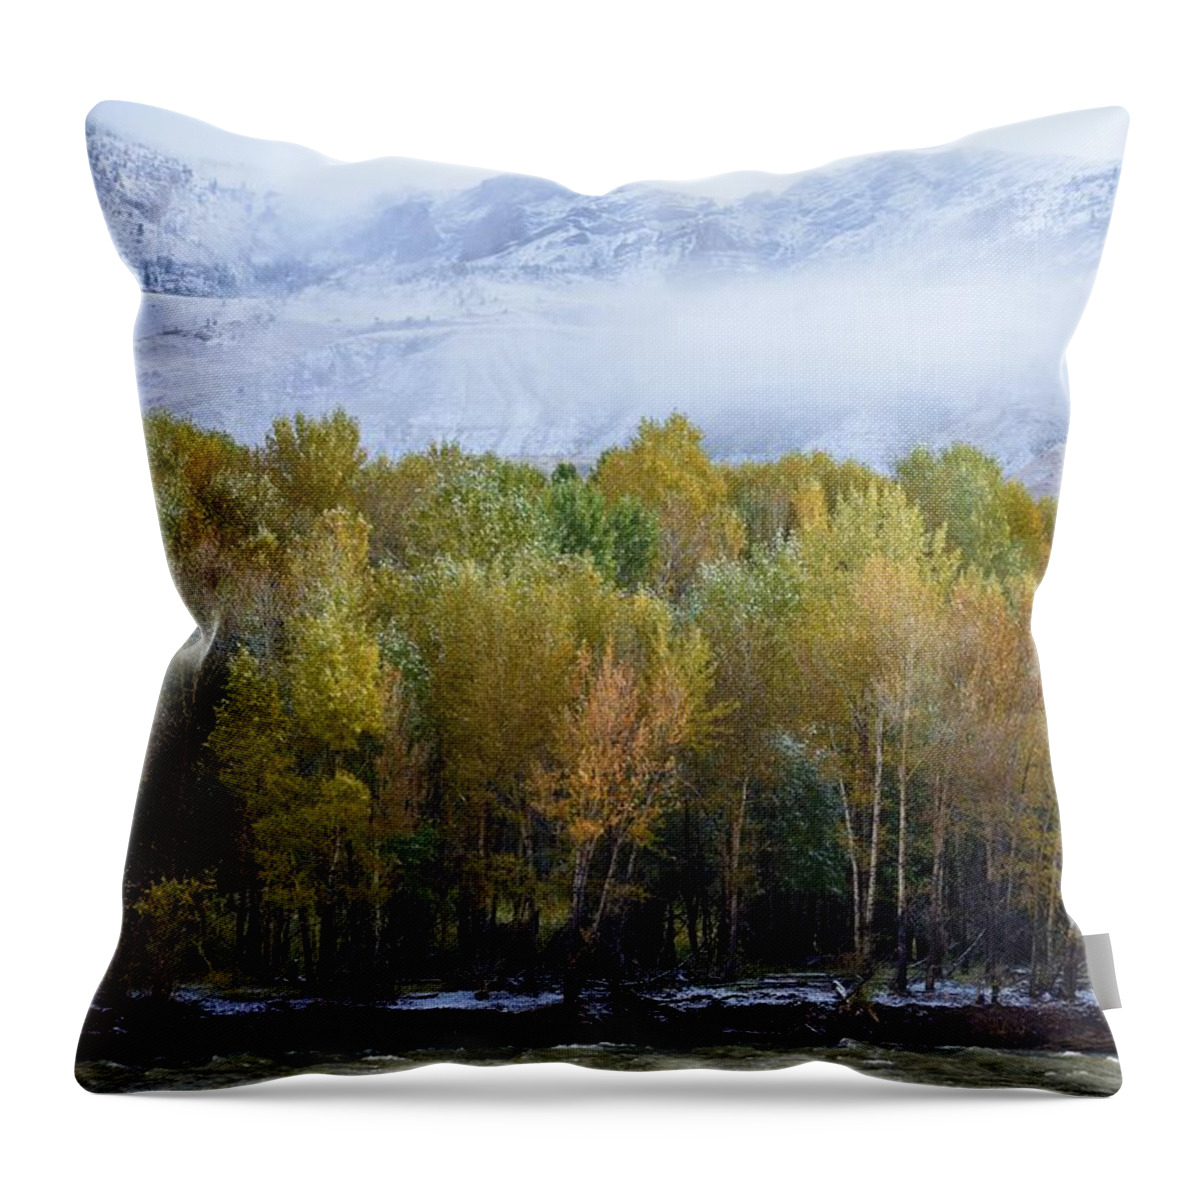 Western Art Throw Pillow featuring the photograph Notes of Autumn by Alden White Ballard